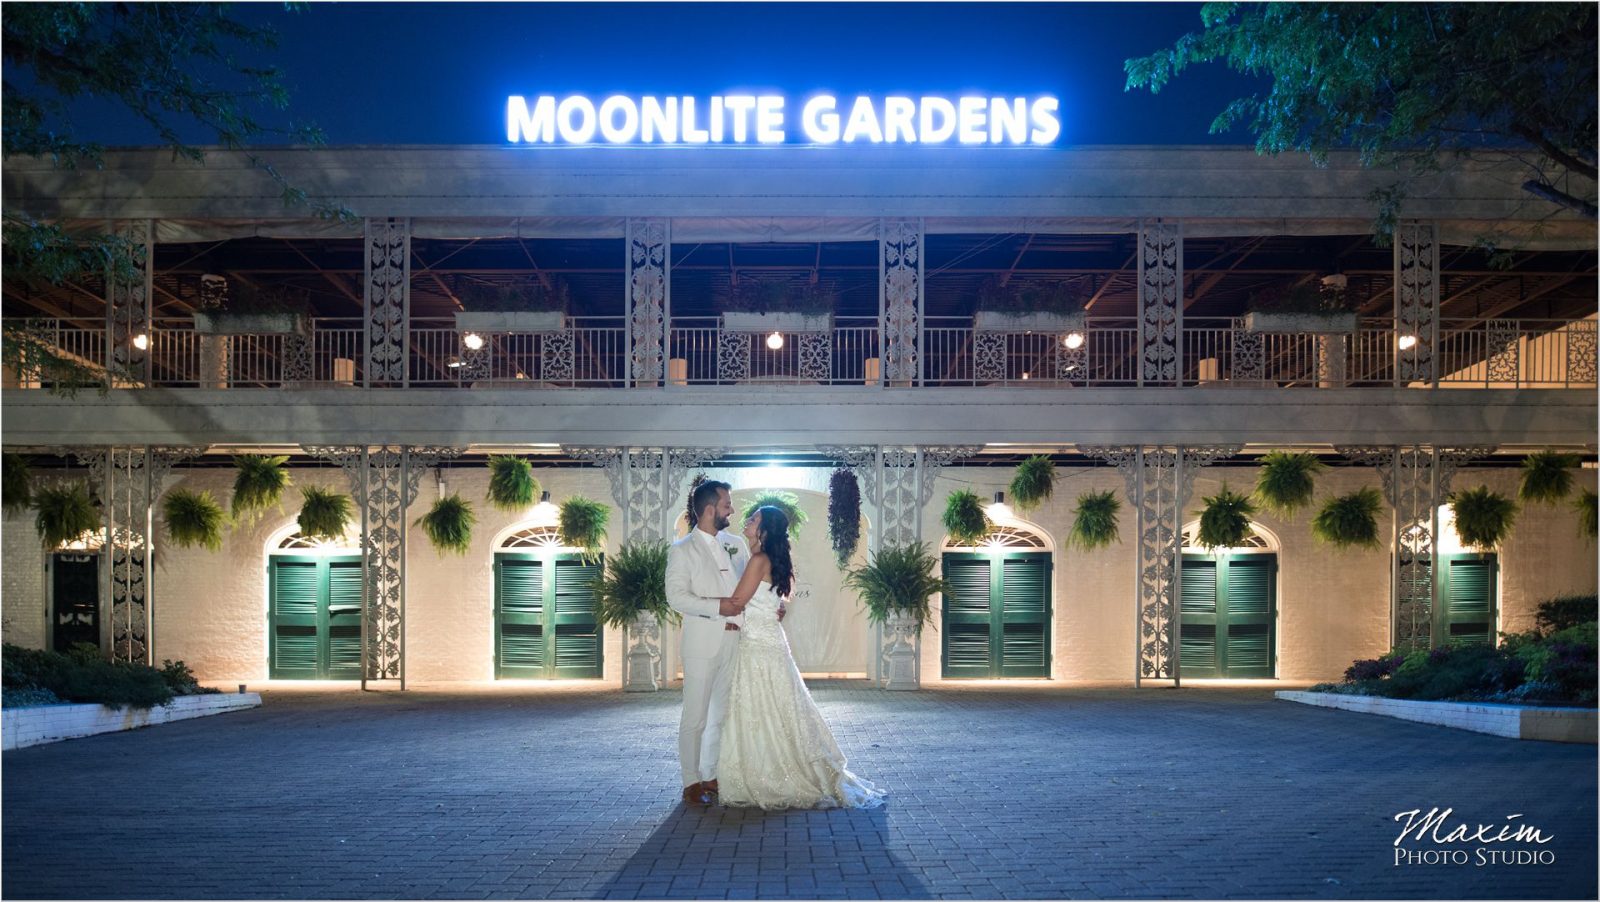 Moonlight Gardens Coney Island night wedding